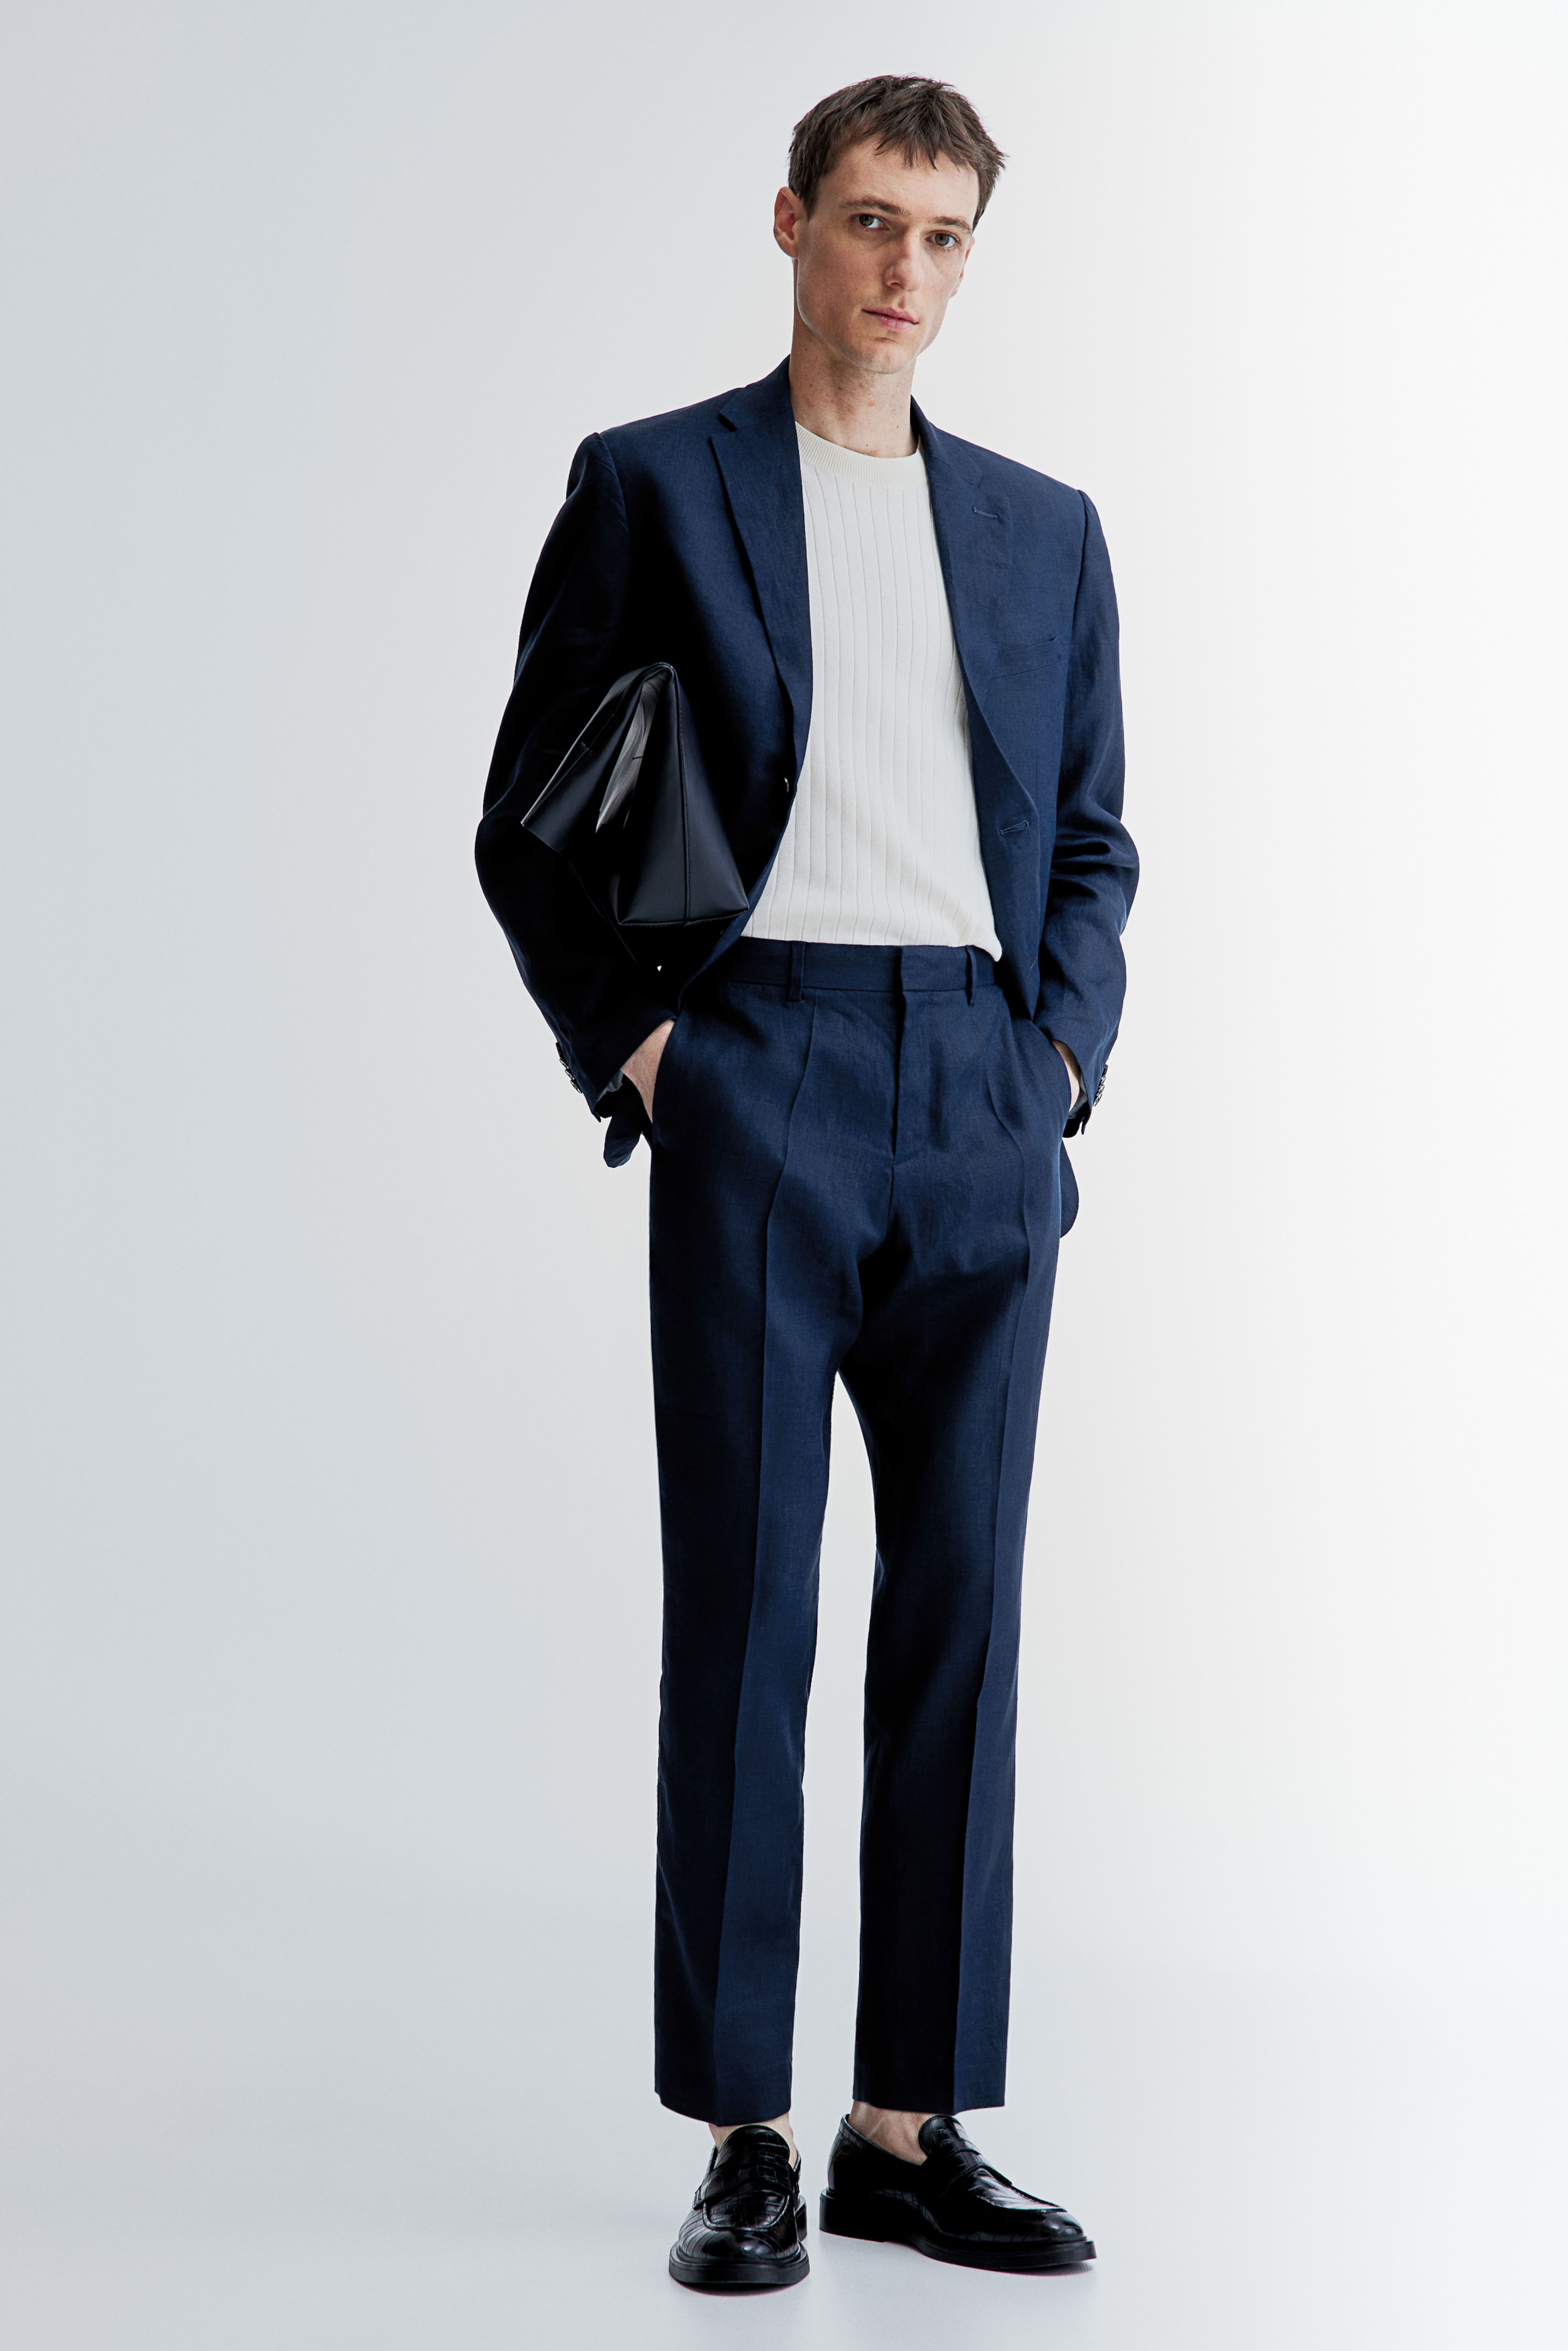 Men's Suits & Blazers | Wedding Linen Tuxedo Prom | H&M US